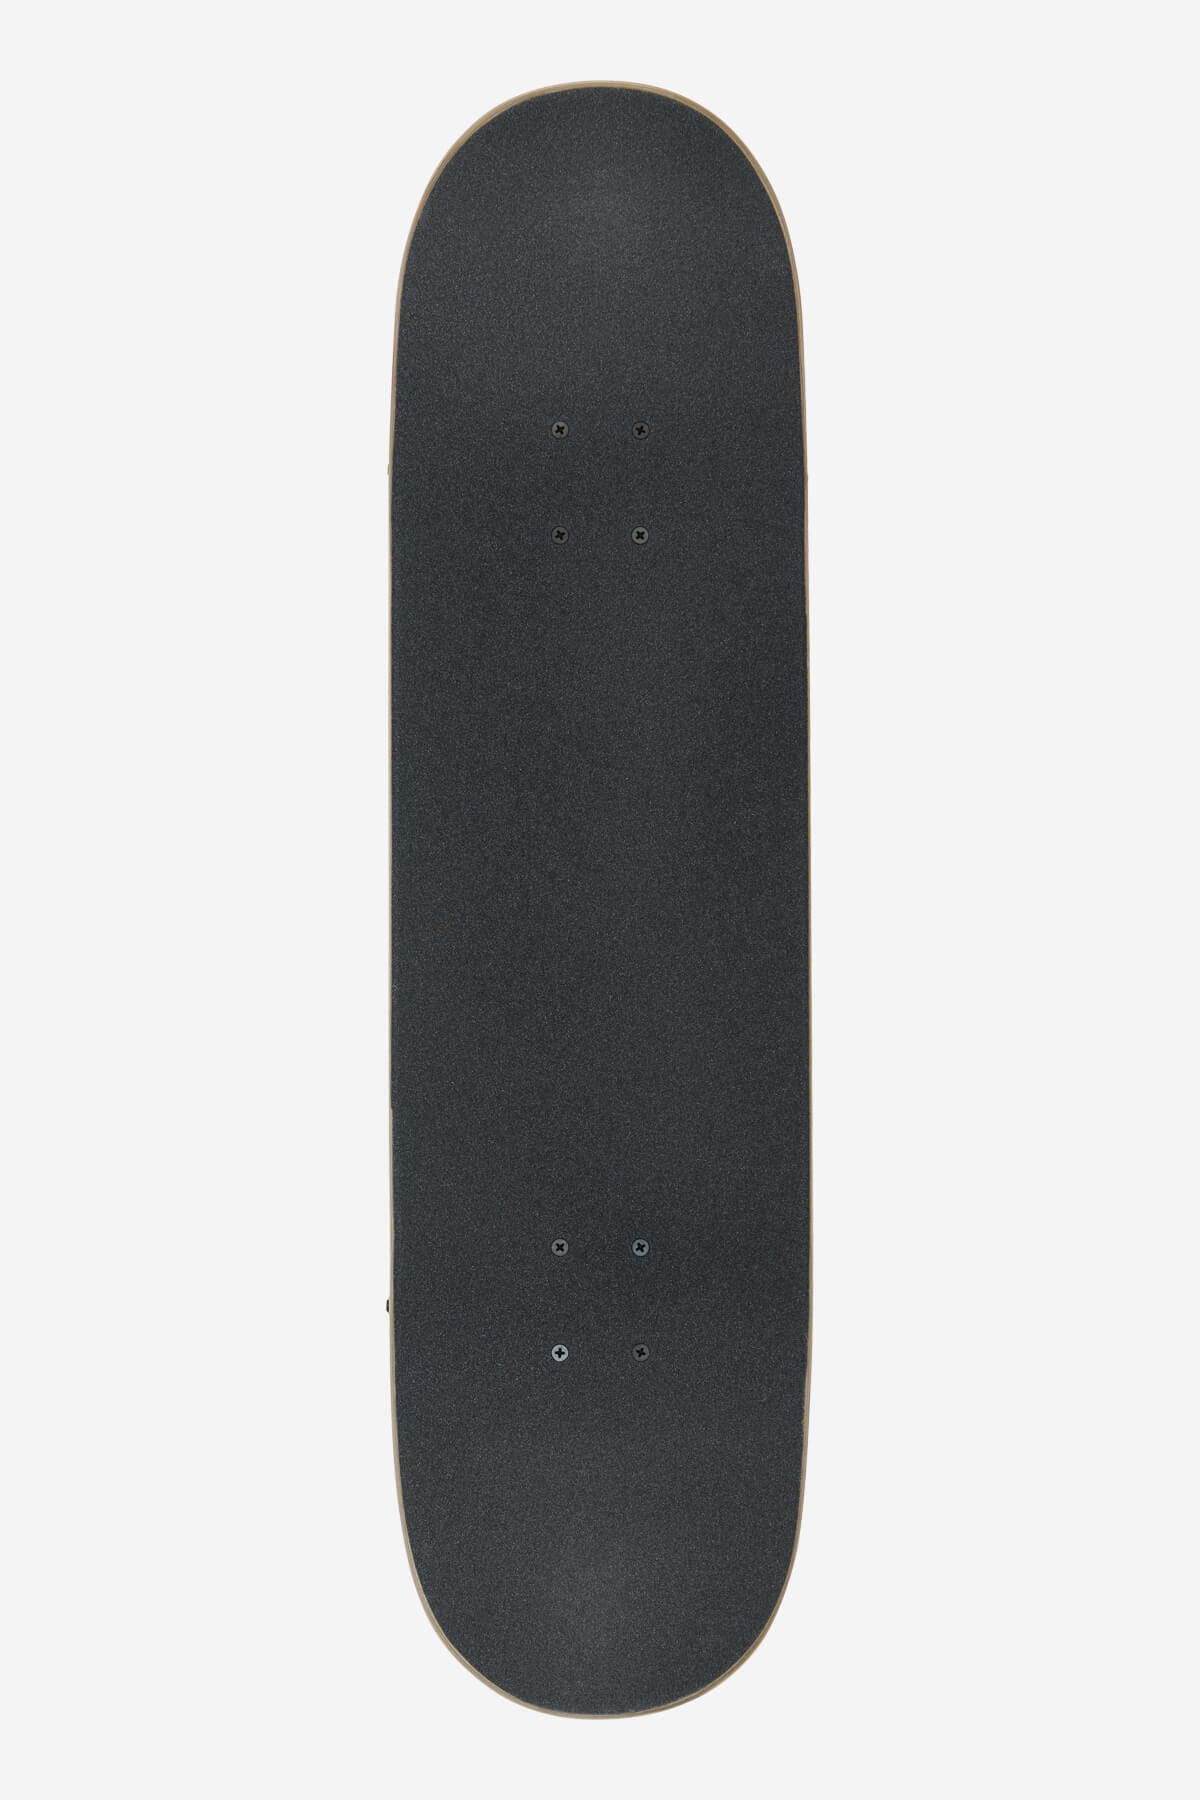 goodstock ruby 8.5" complete skateboard